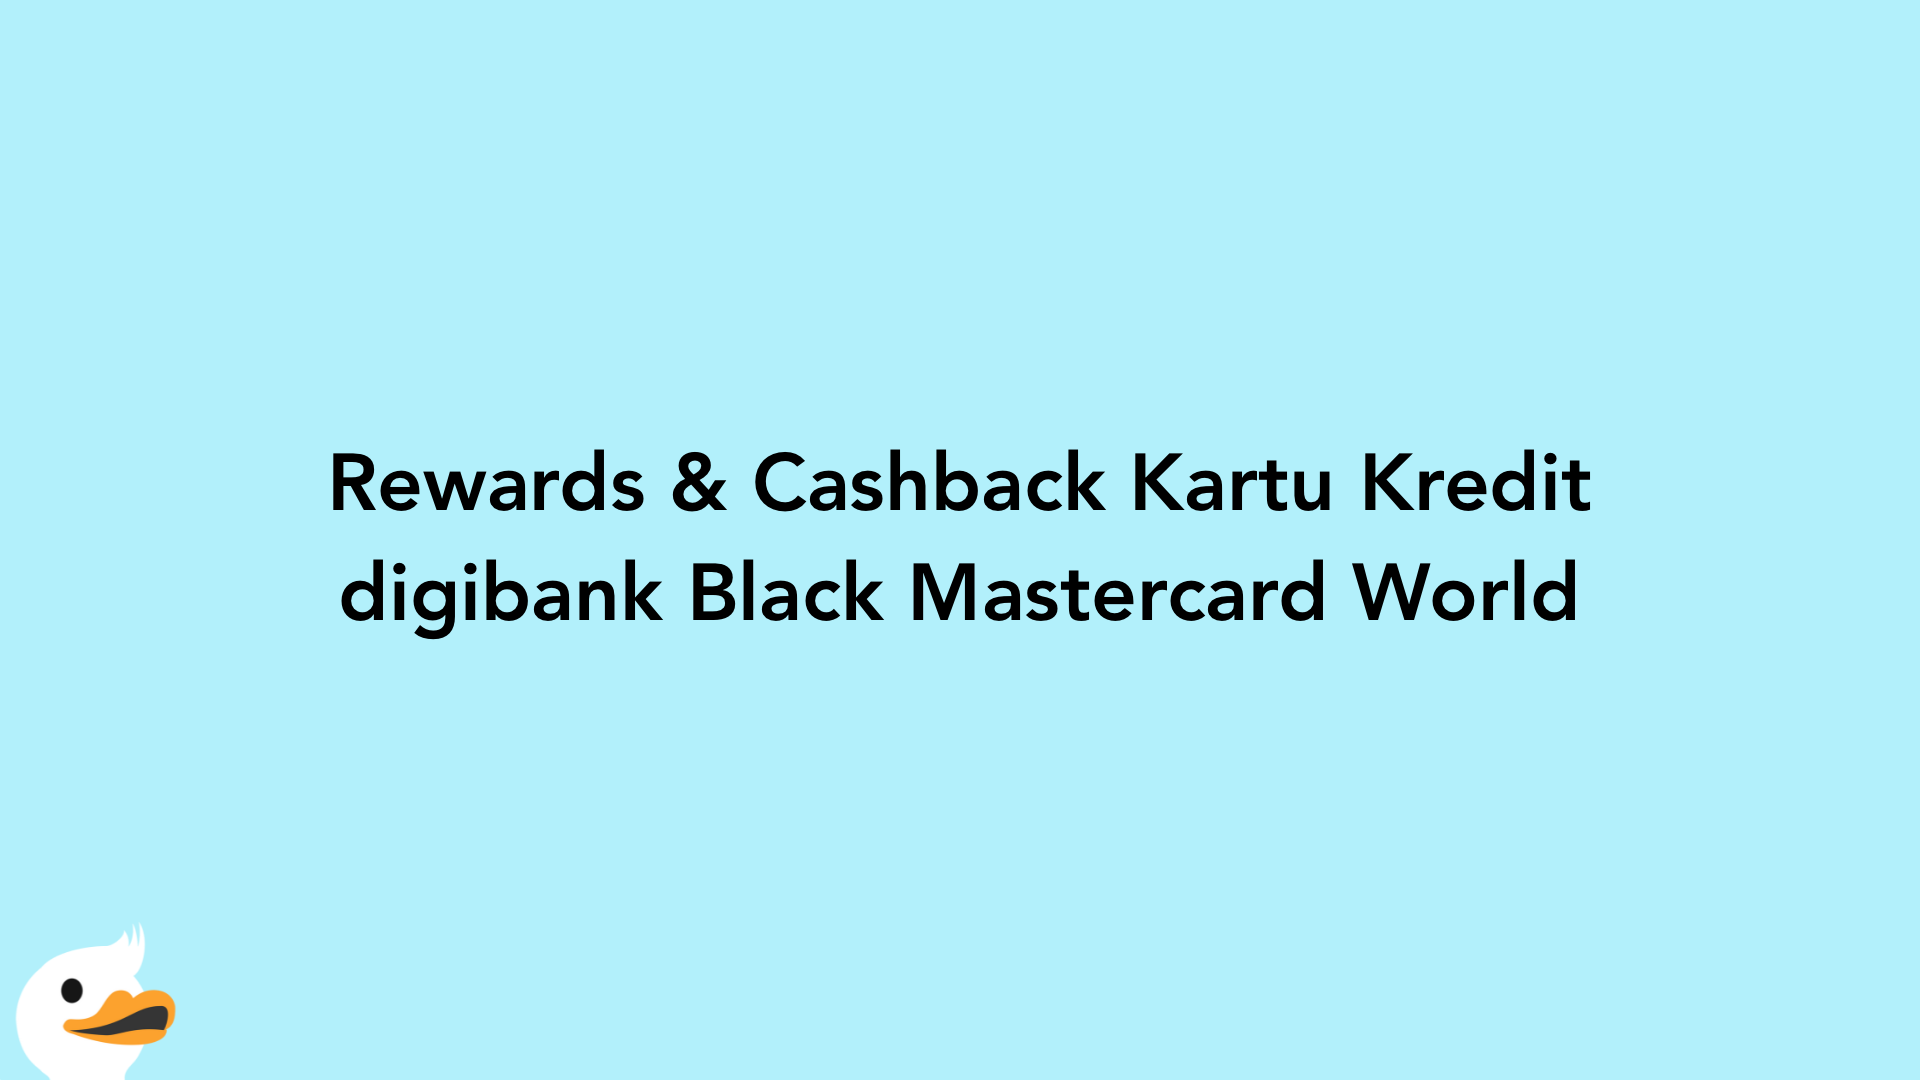 Rewards & Cashback Kartu Kredit digibank Black Mastercard World